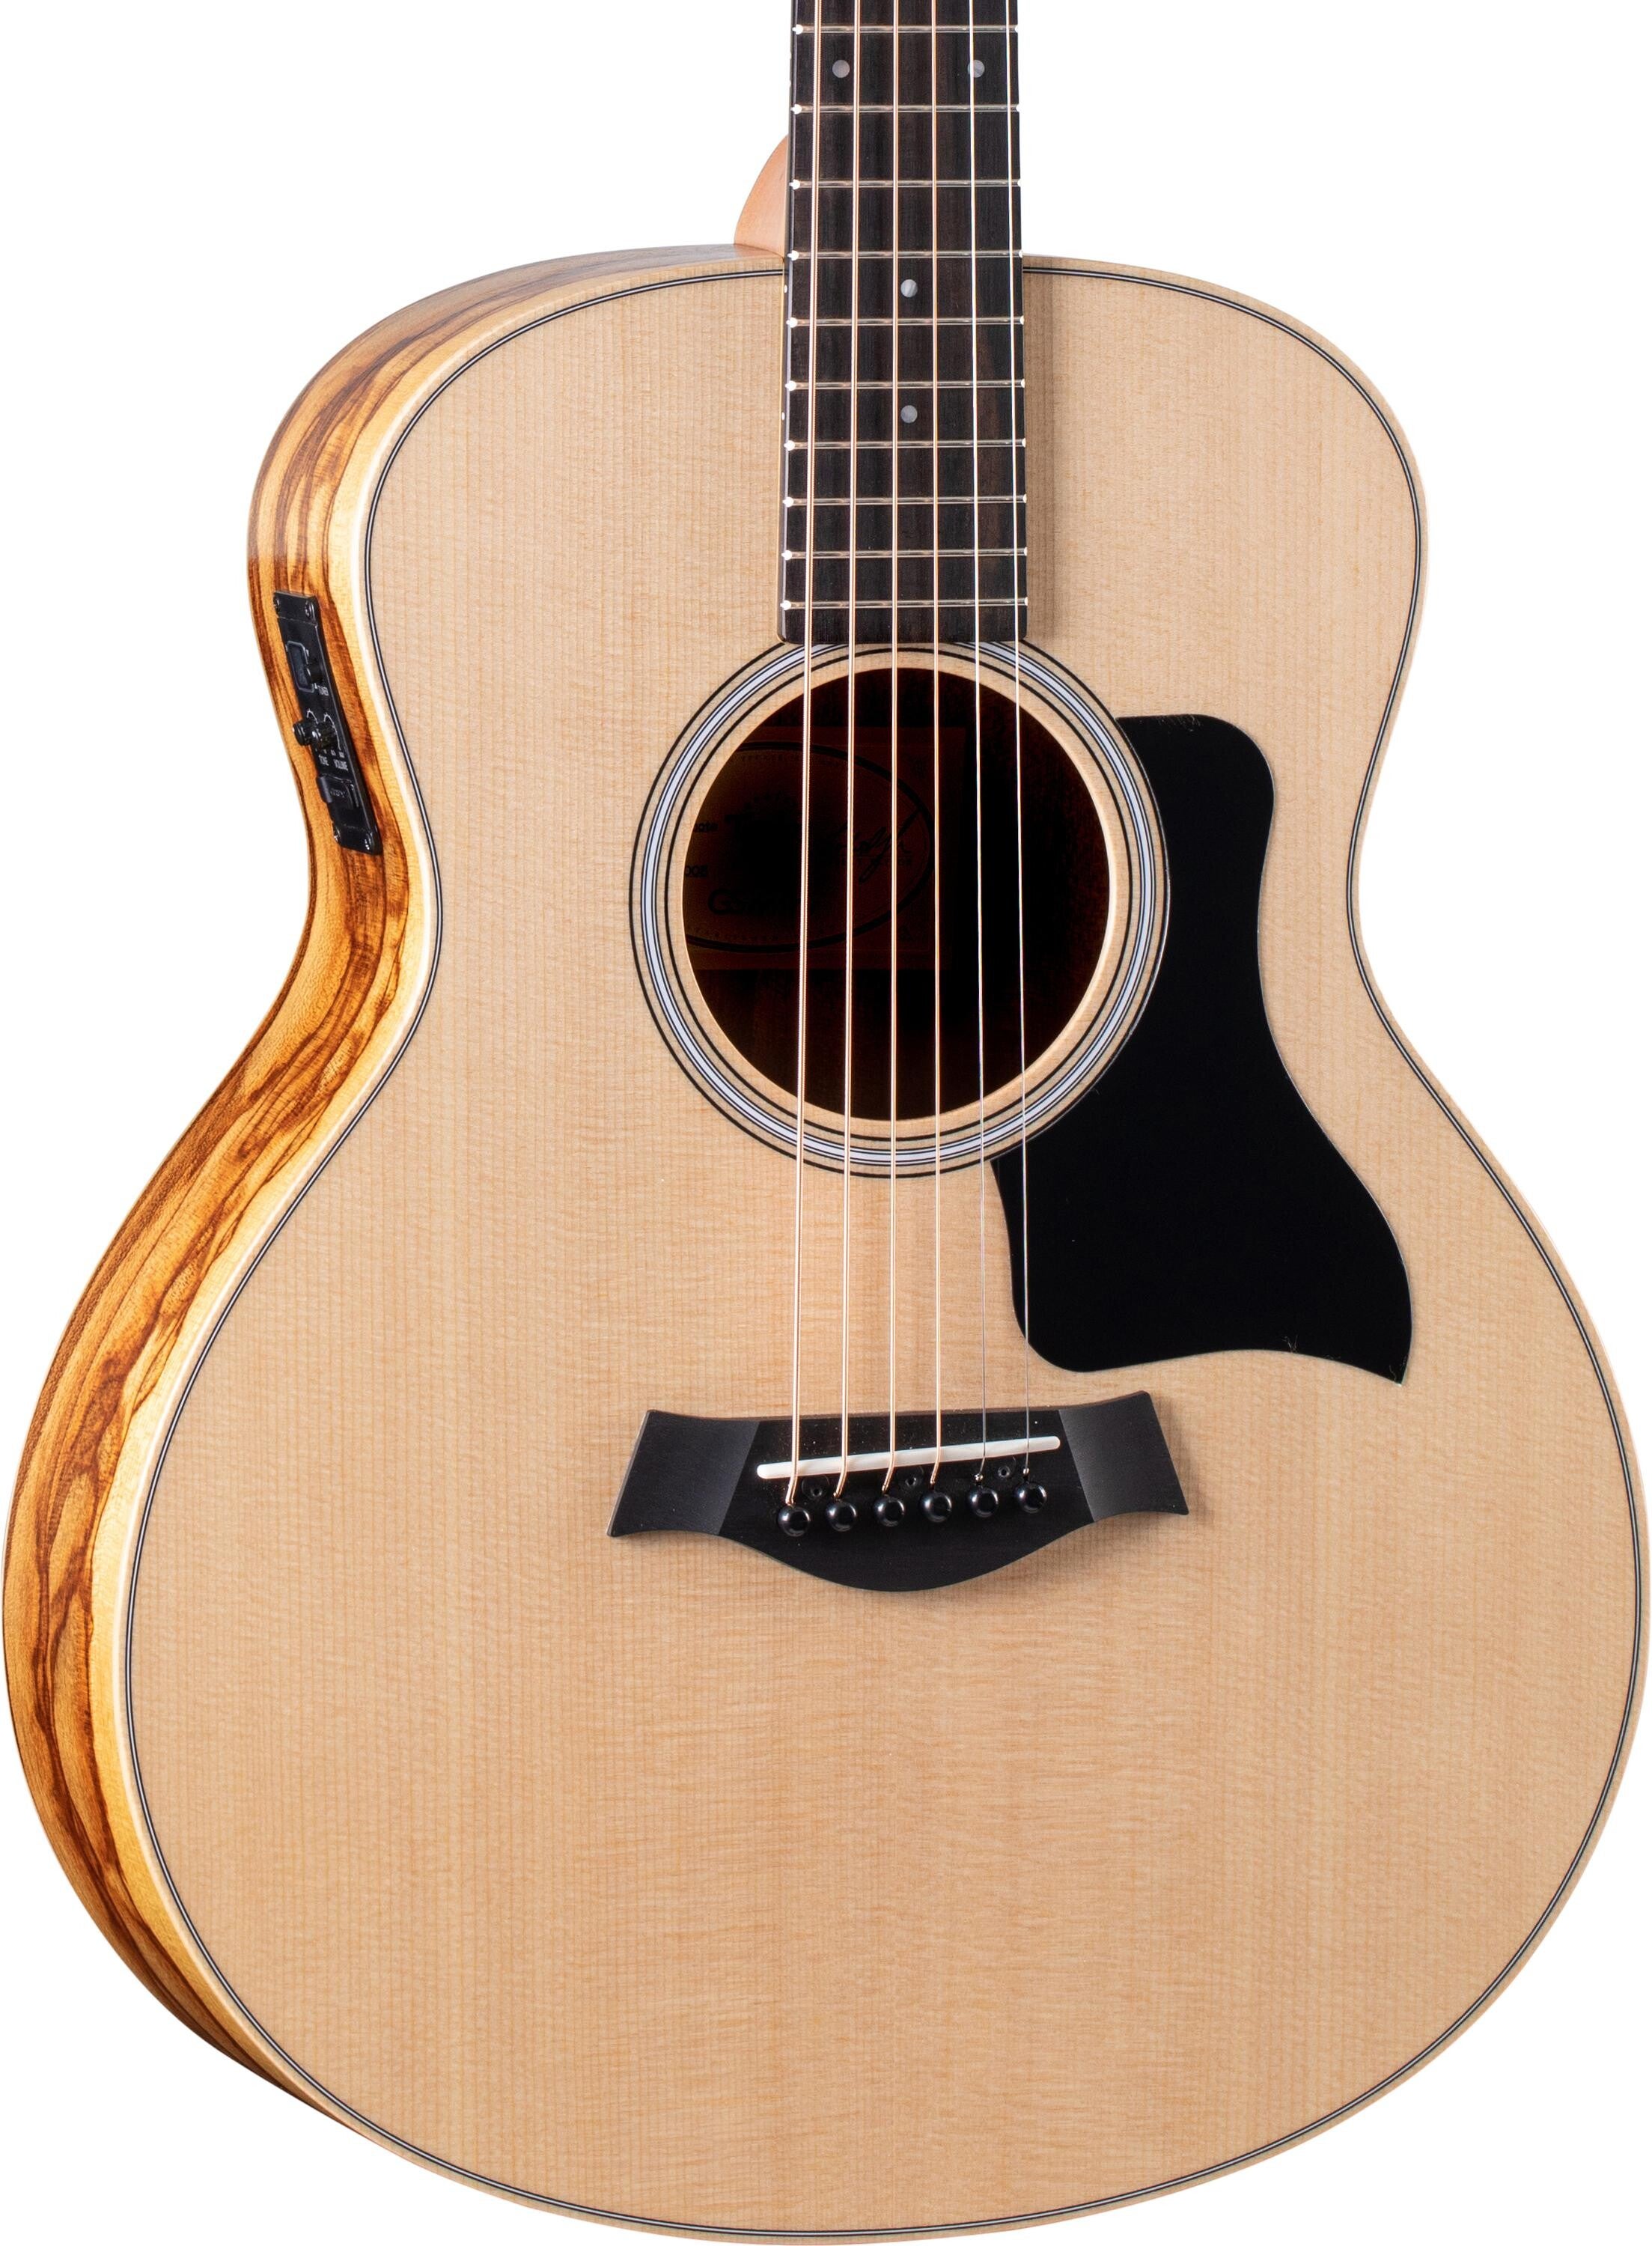 Taylor GS Mini-e Ziricote LTD Acoustic-electric Guitar - Natural with 